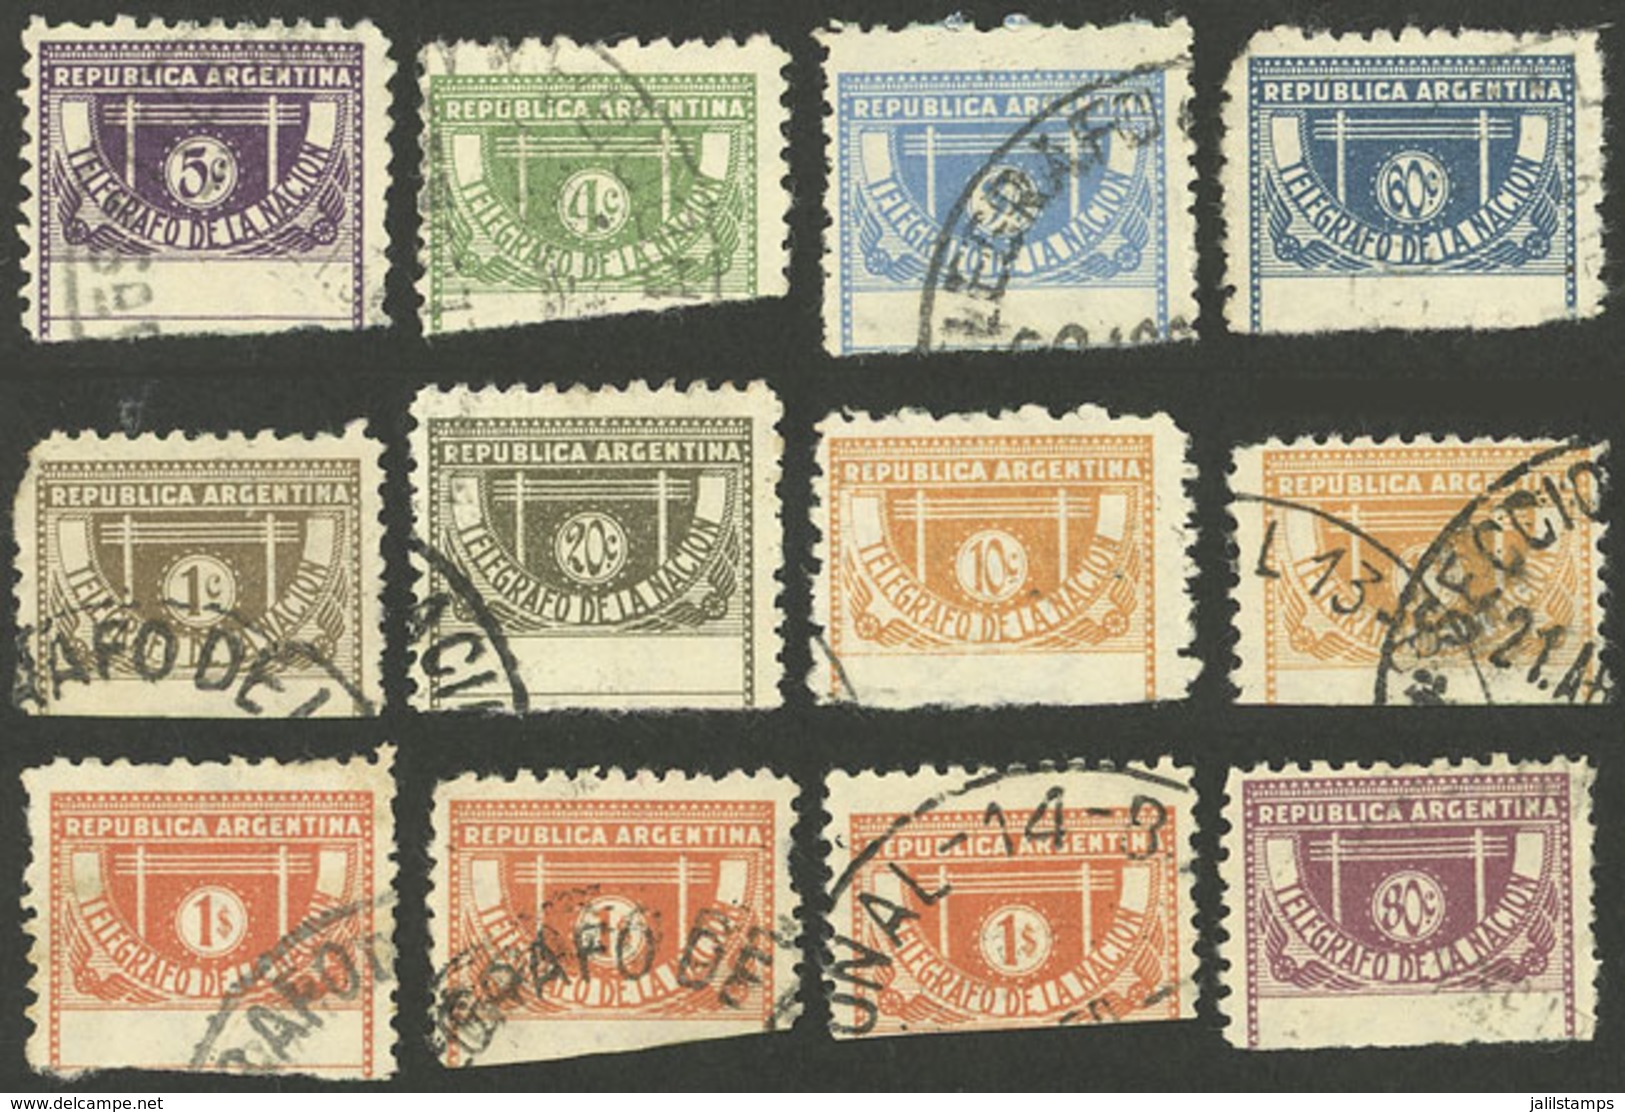 ARGENTINA: 10 Used Stamps Of Telégrafo De La Nación, Different Values, VF Quality - Telegrafo